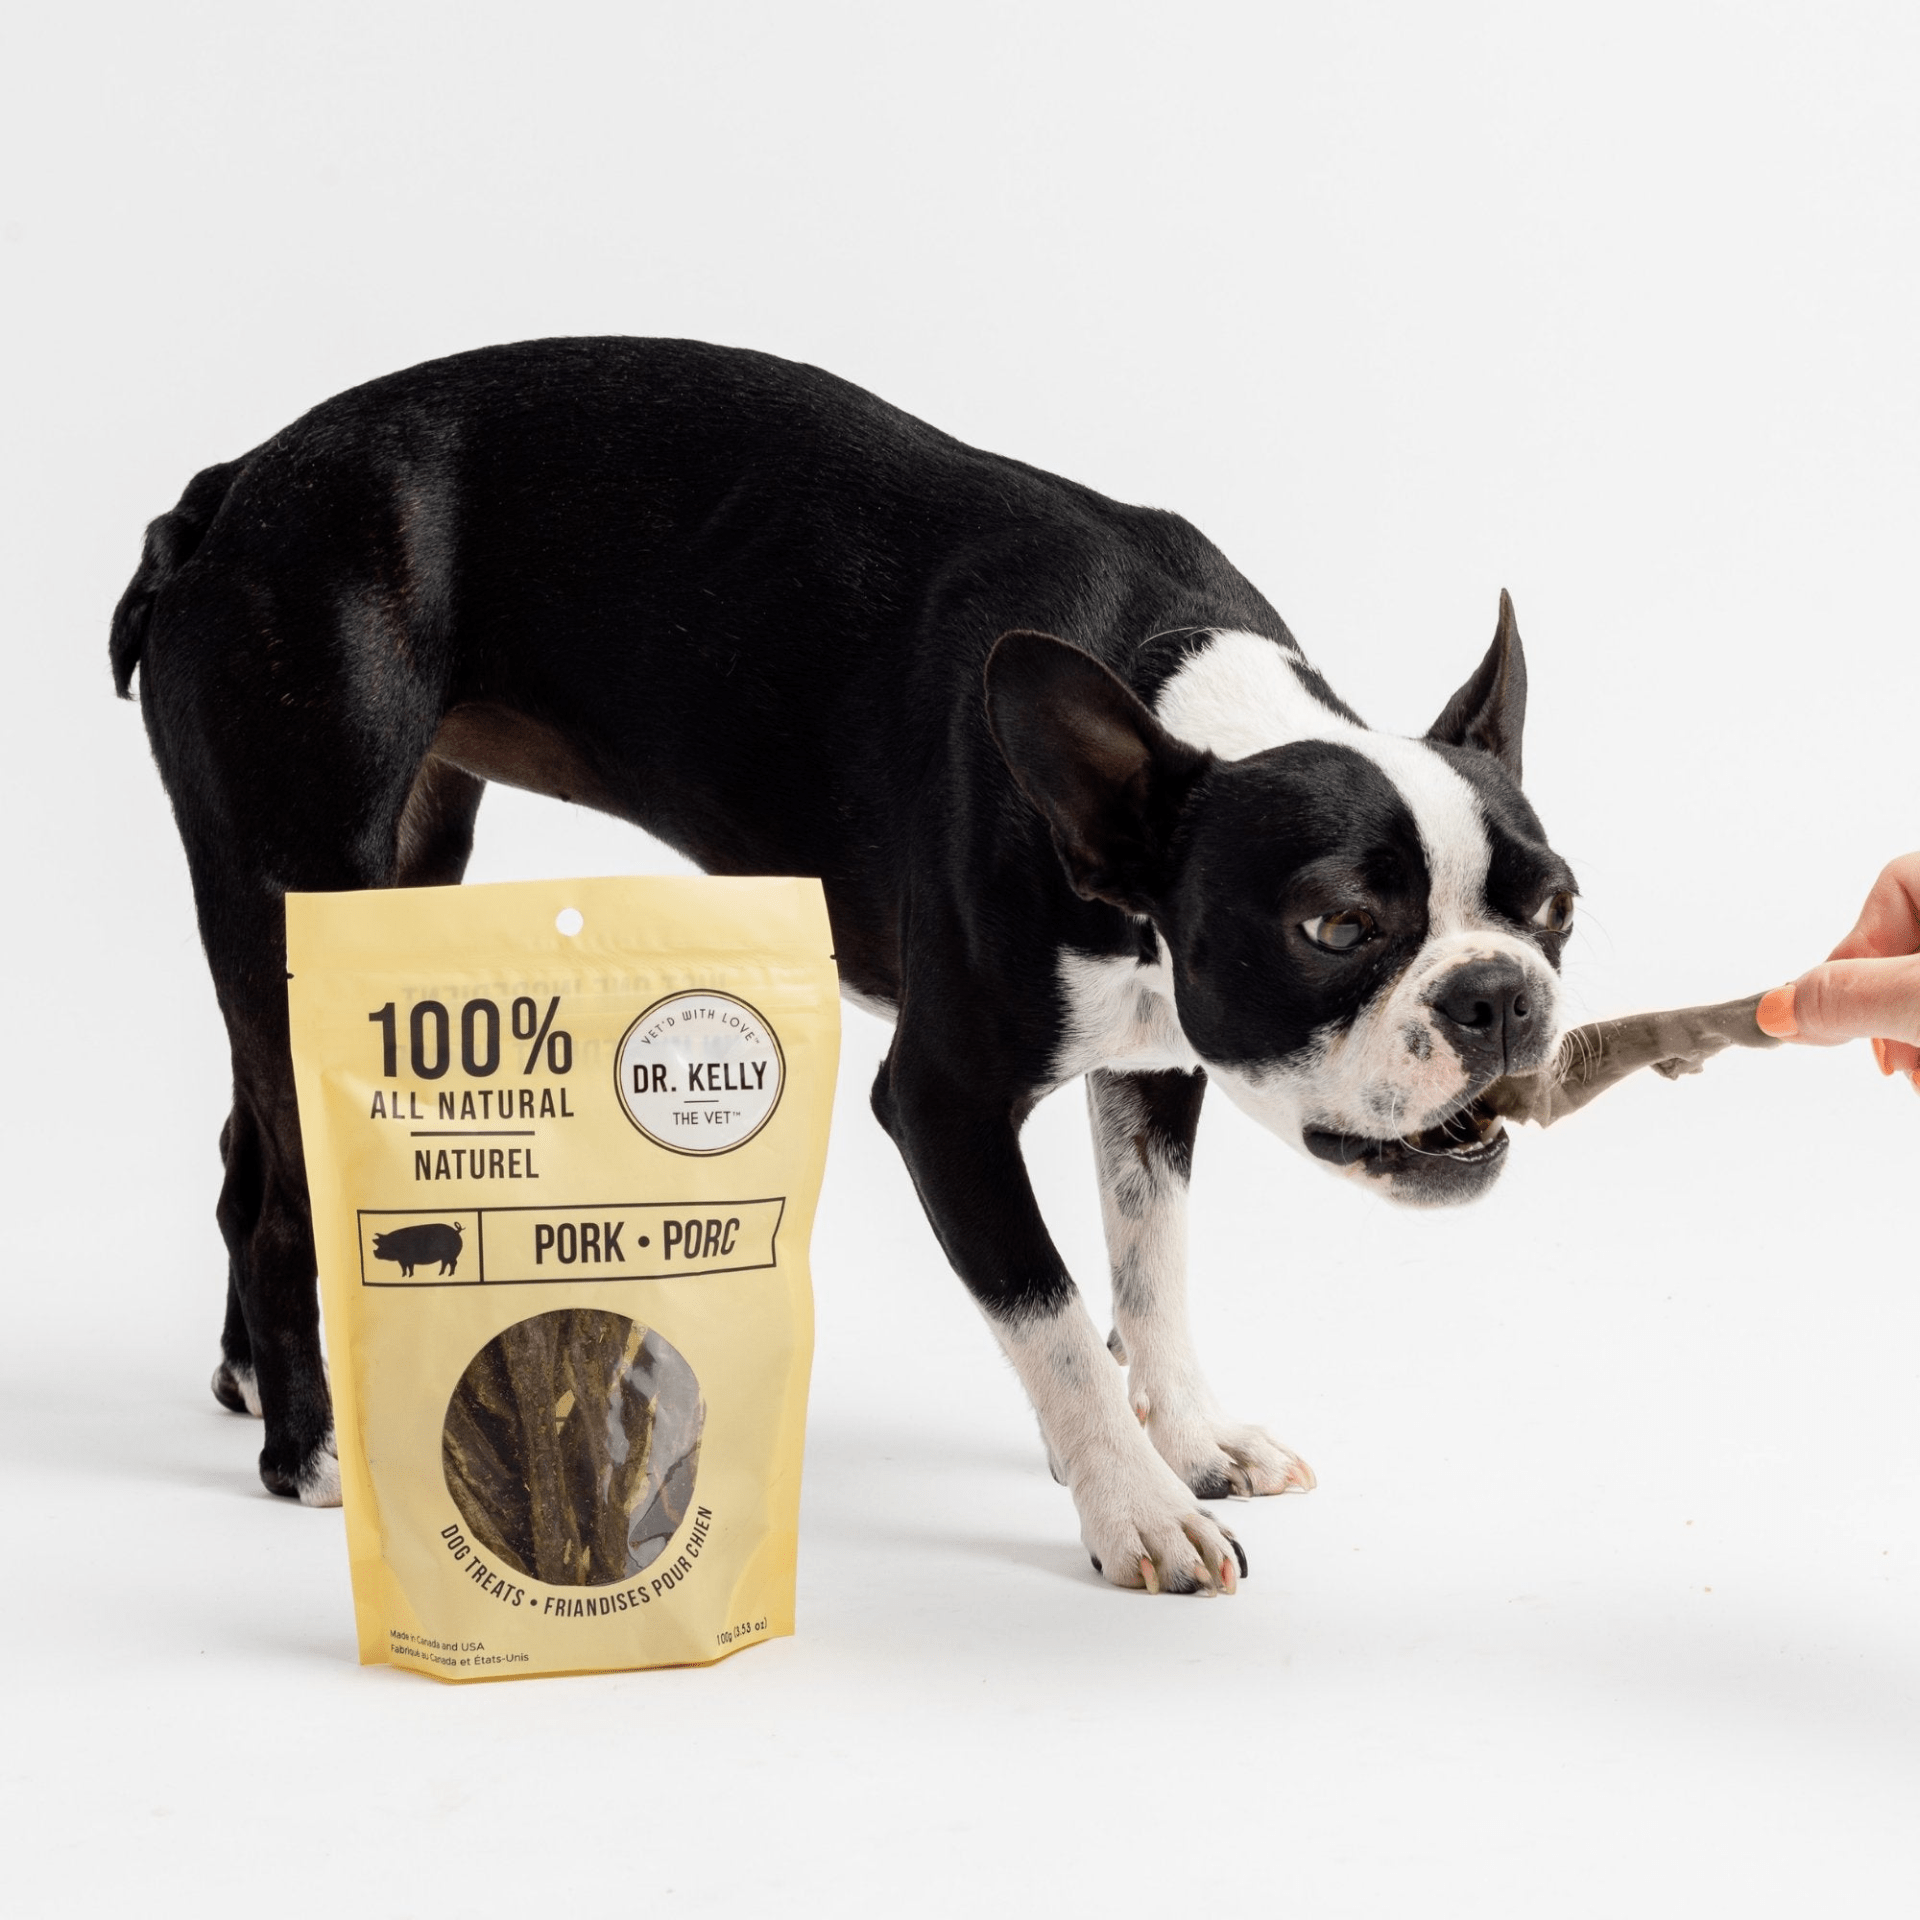 Dog and Pet Stuff 100g / 3.53 oz Dr. Kelly The Vet 100% Natural Dog Treats - Pork